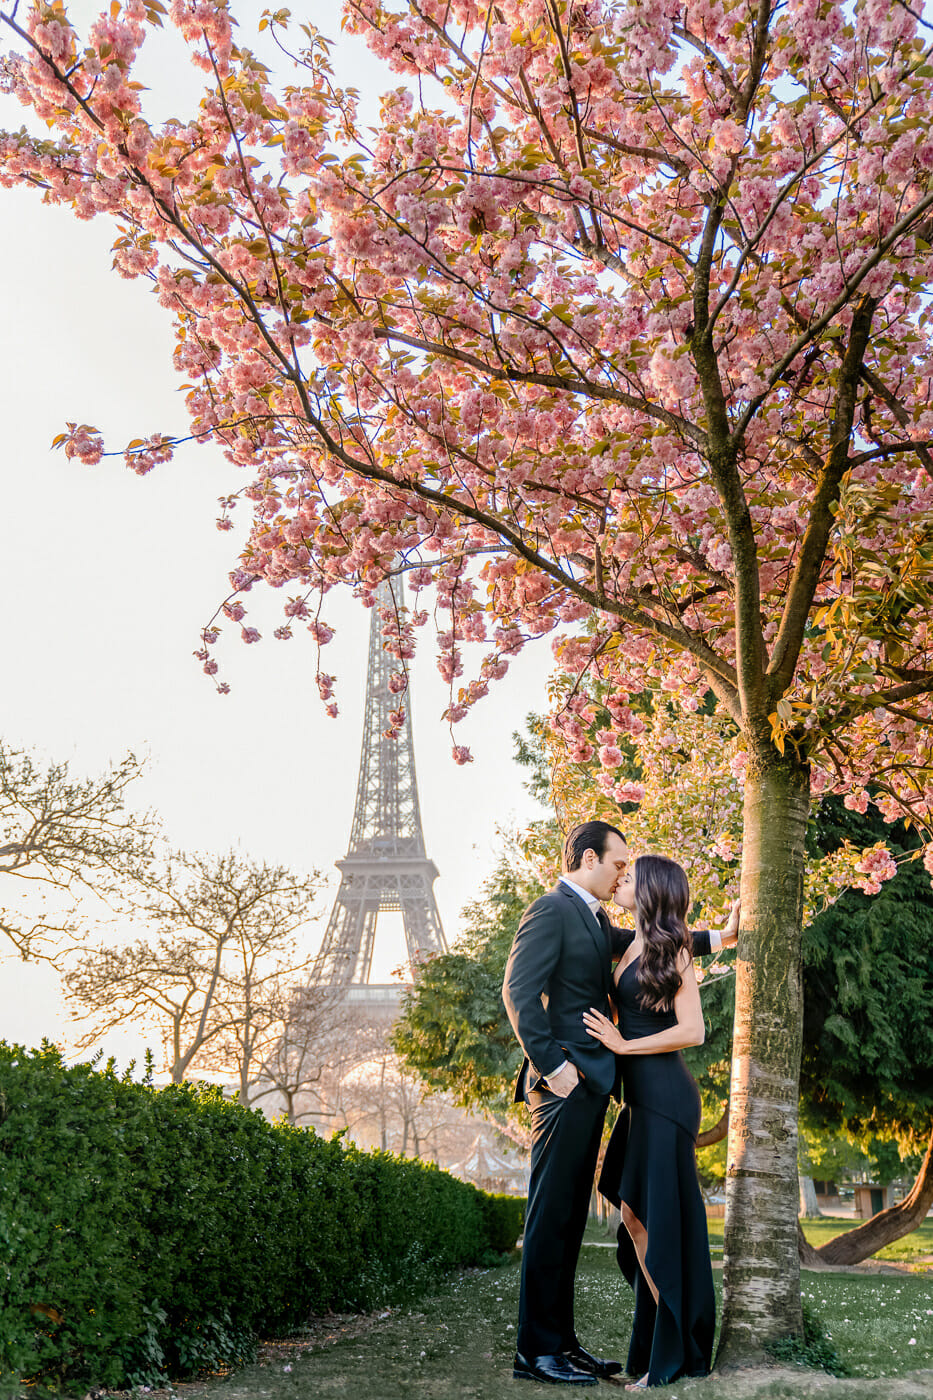 Paris engagement photos Cherry Blossom Season with Eiffel Tower